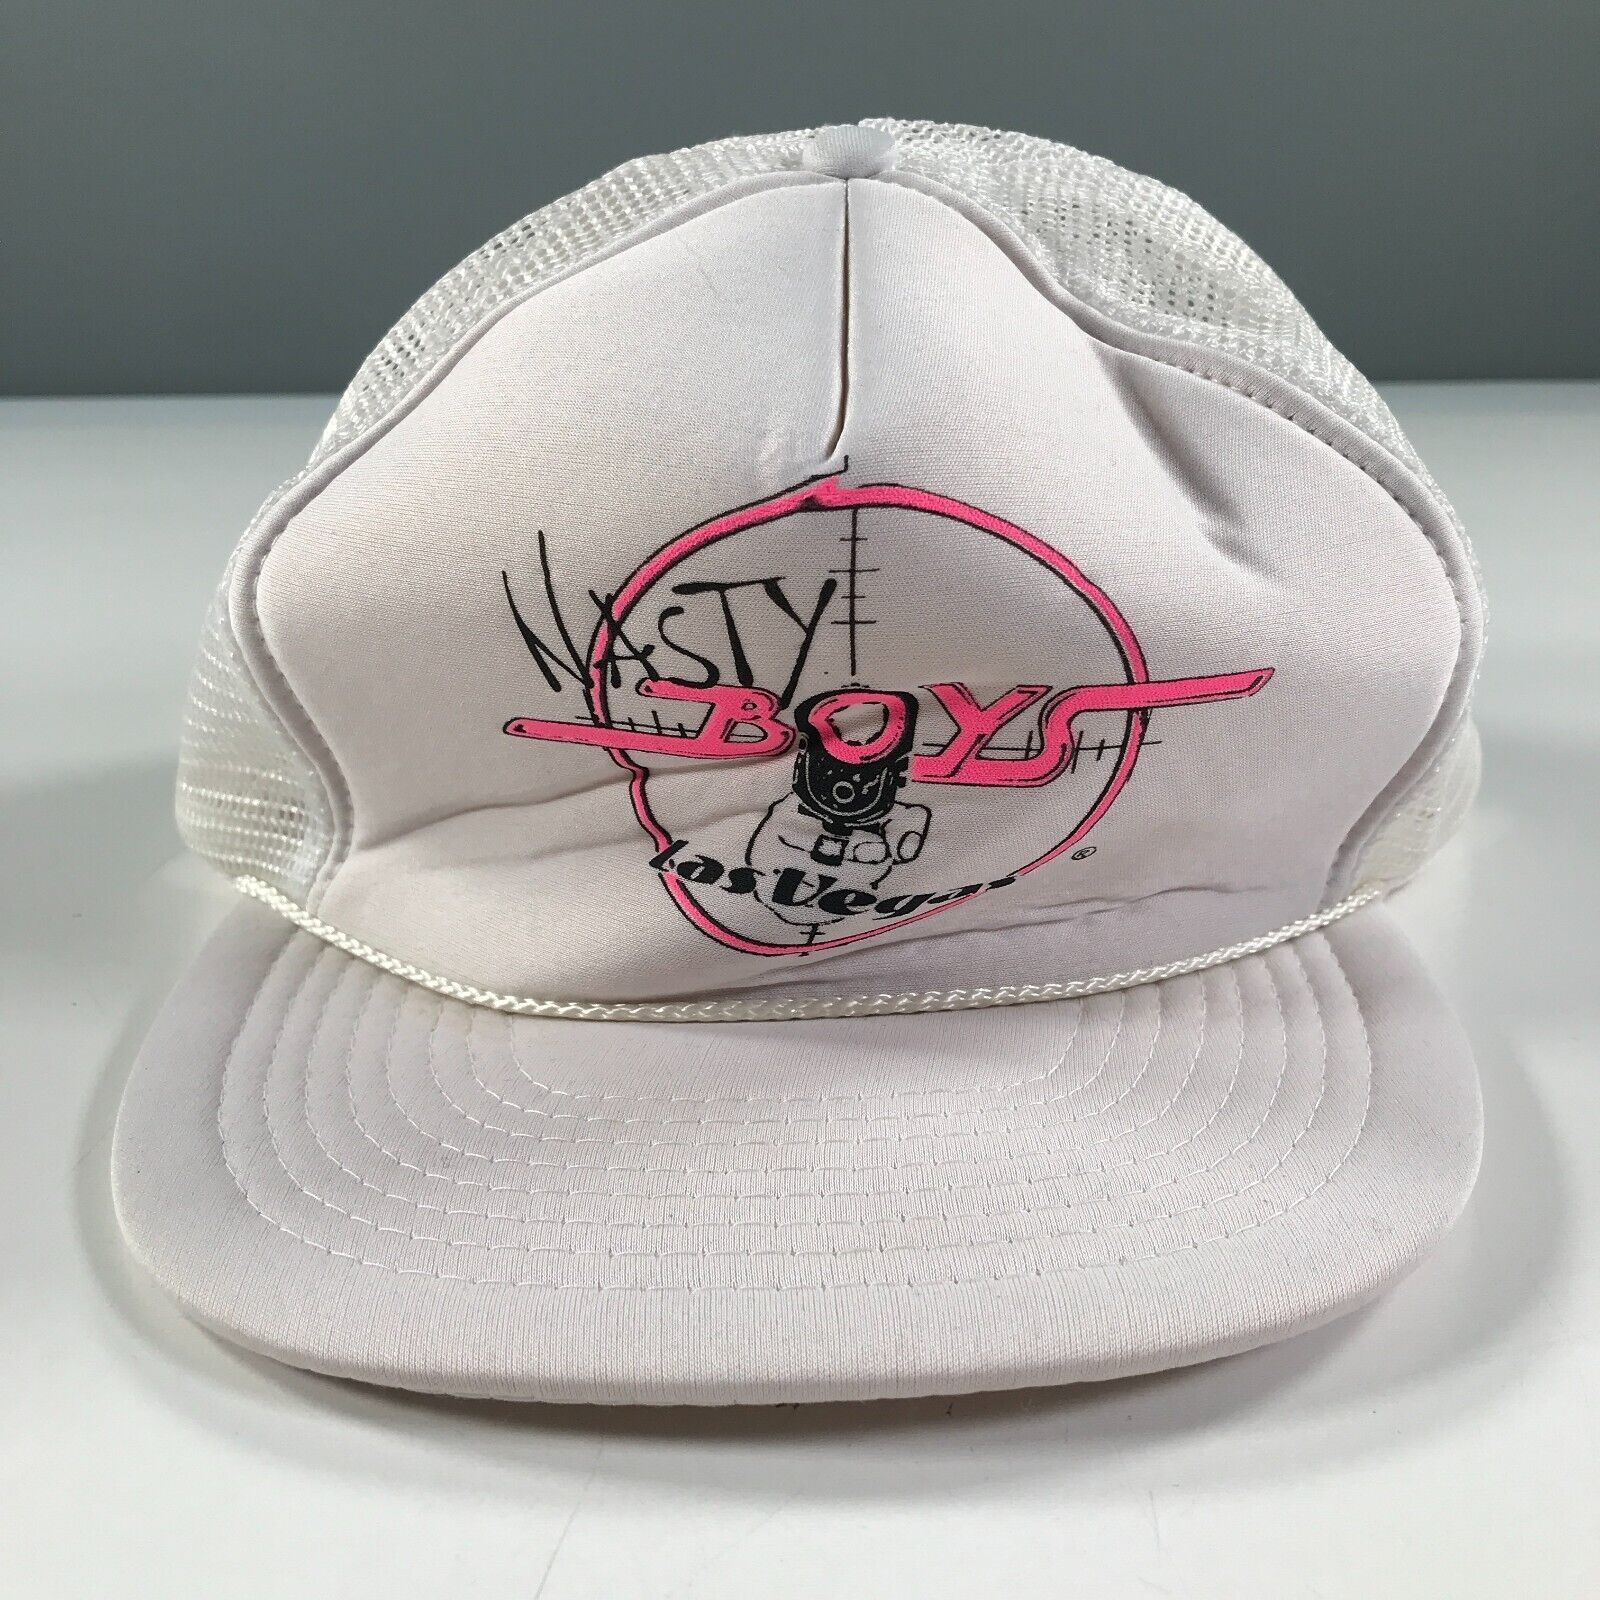 Primary image for Vintage Nasty Boys Trucker Hat White Pink Las Vegas Police Target Logo